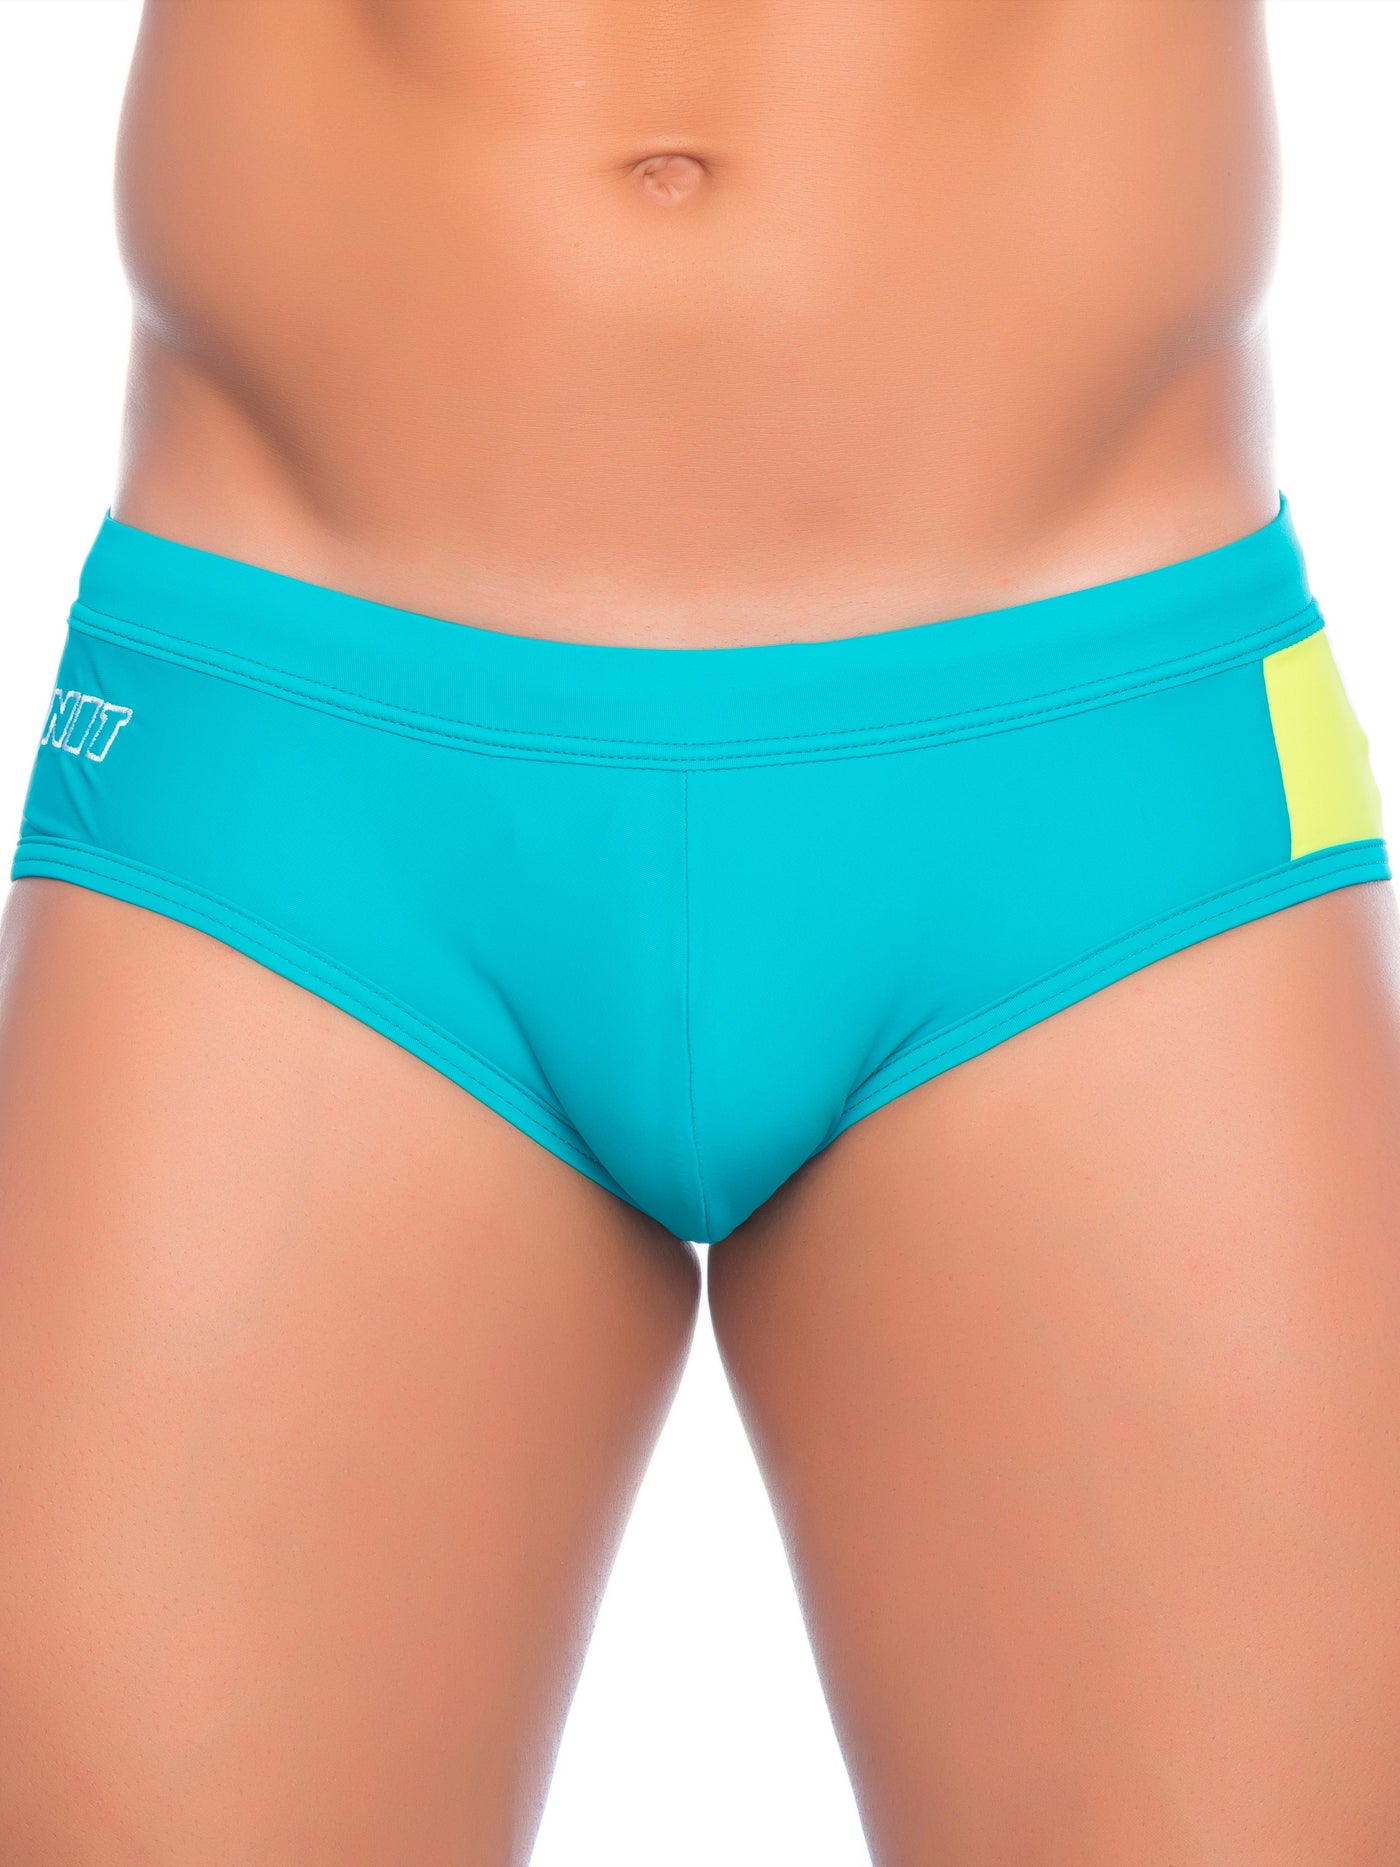 NIT Cory Briefs Mens Swimwear Slip Enhancing Pouch Green Yellow - Activemen Clothing